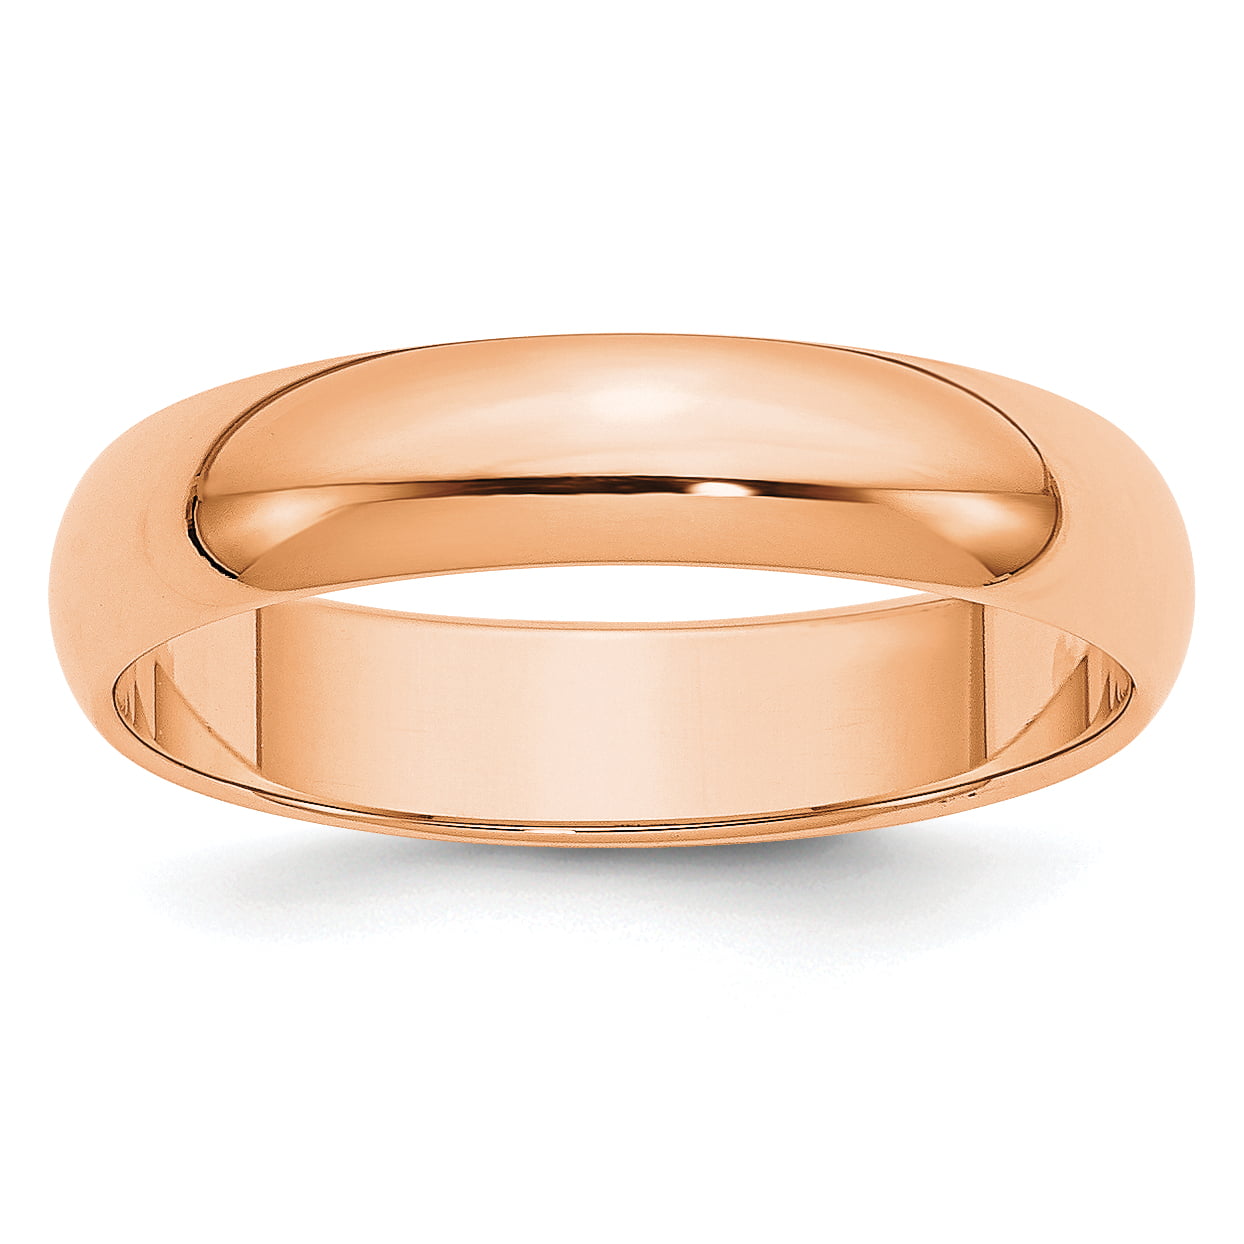 14k Yellow Gold 4.7 mm Diamond Cut Men's Wedding Band Ring 1.4 gram size 9 to 13 